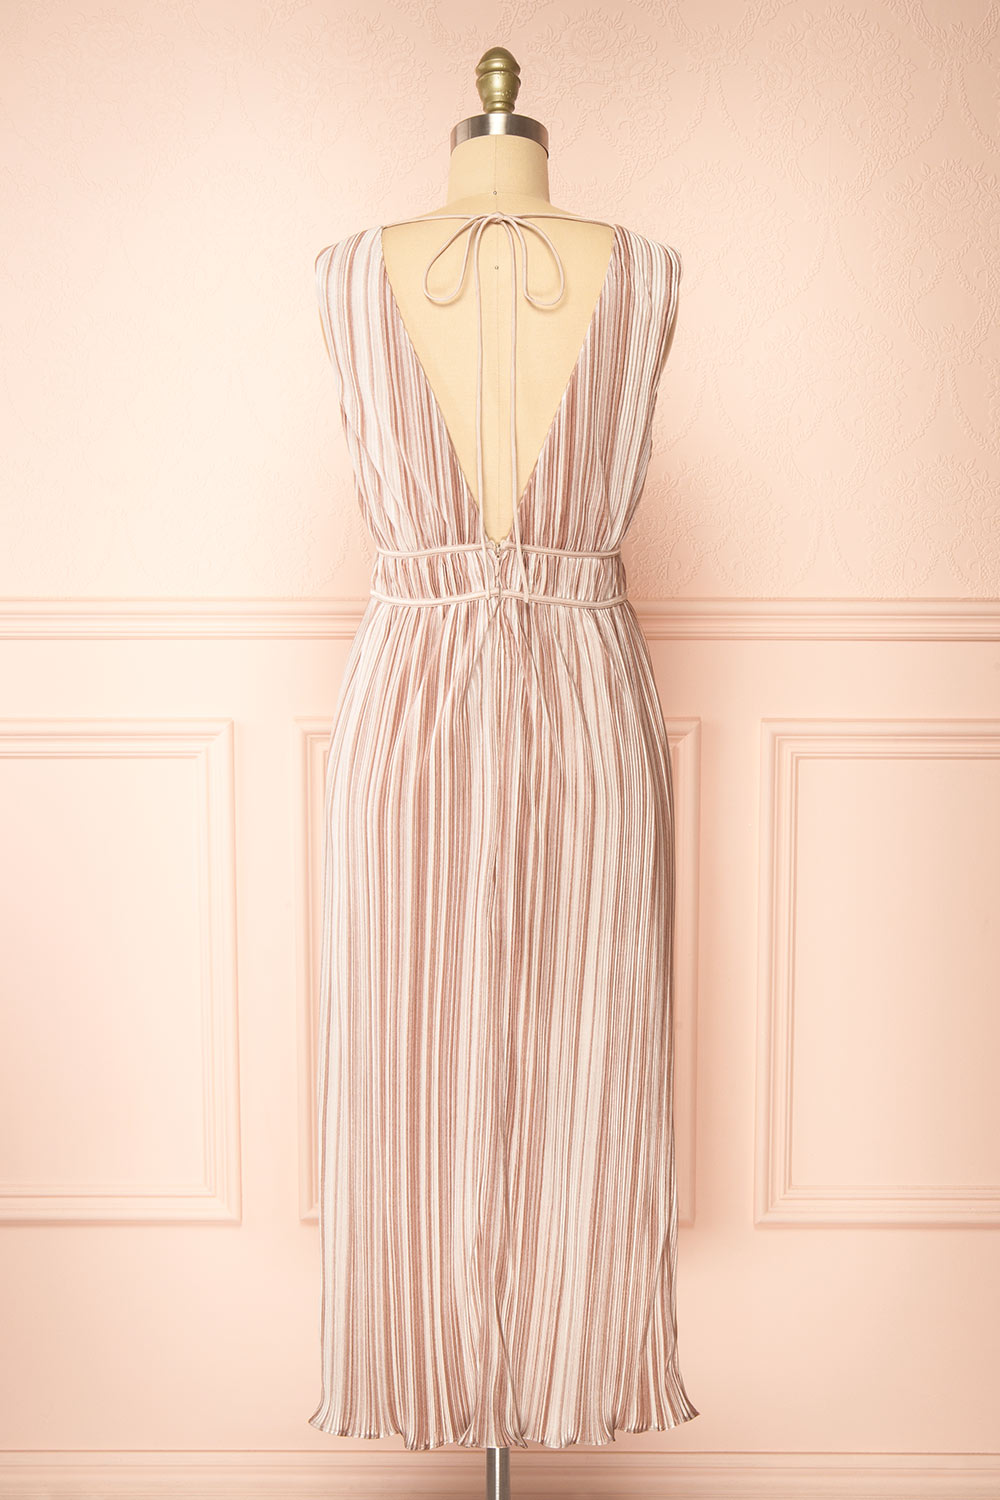 Gloriane Pleated Beige Multi-Tone Dress | Boutique 1861 back view